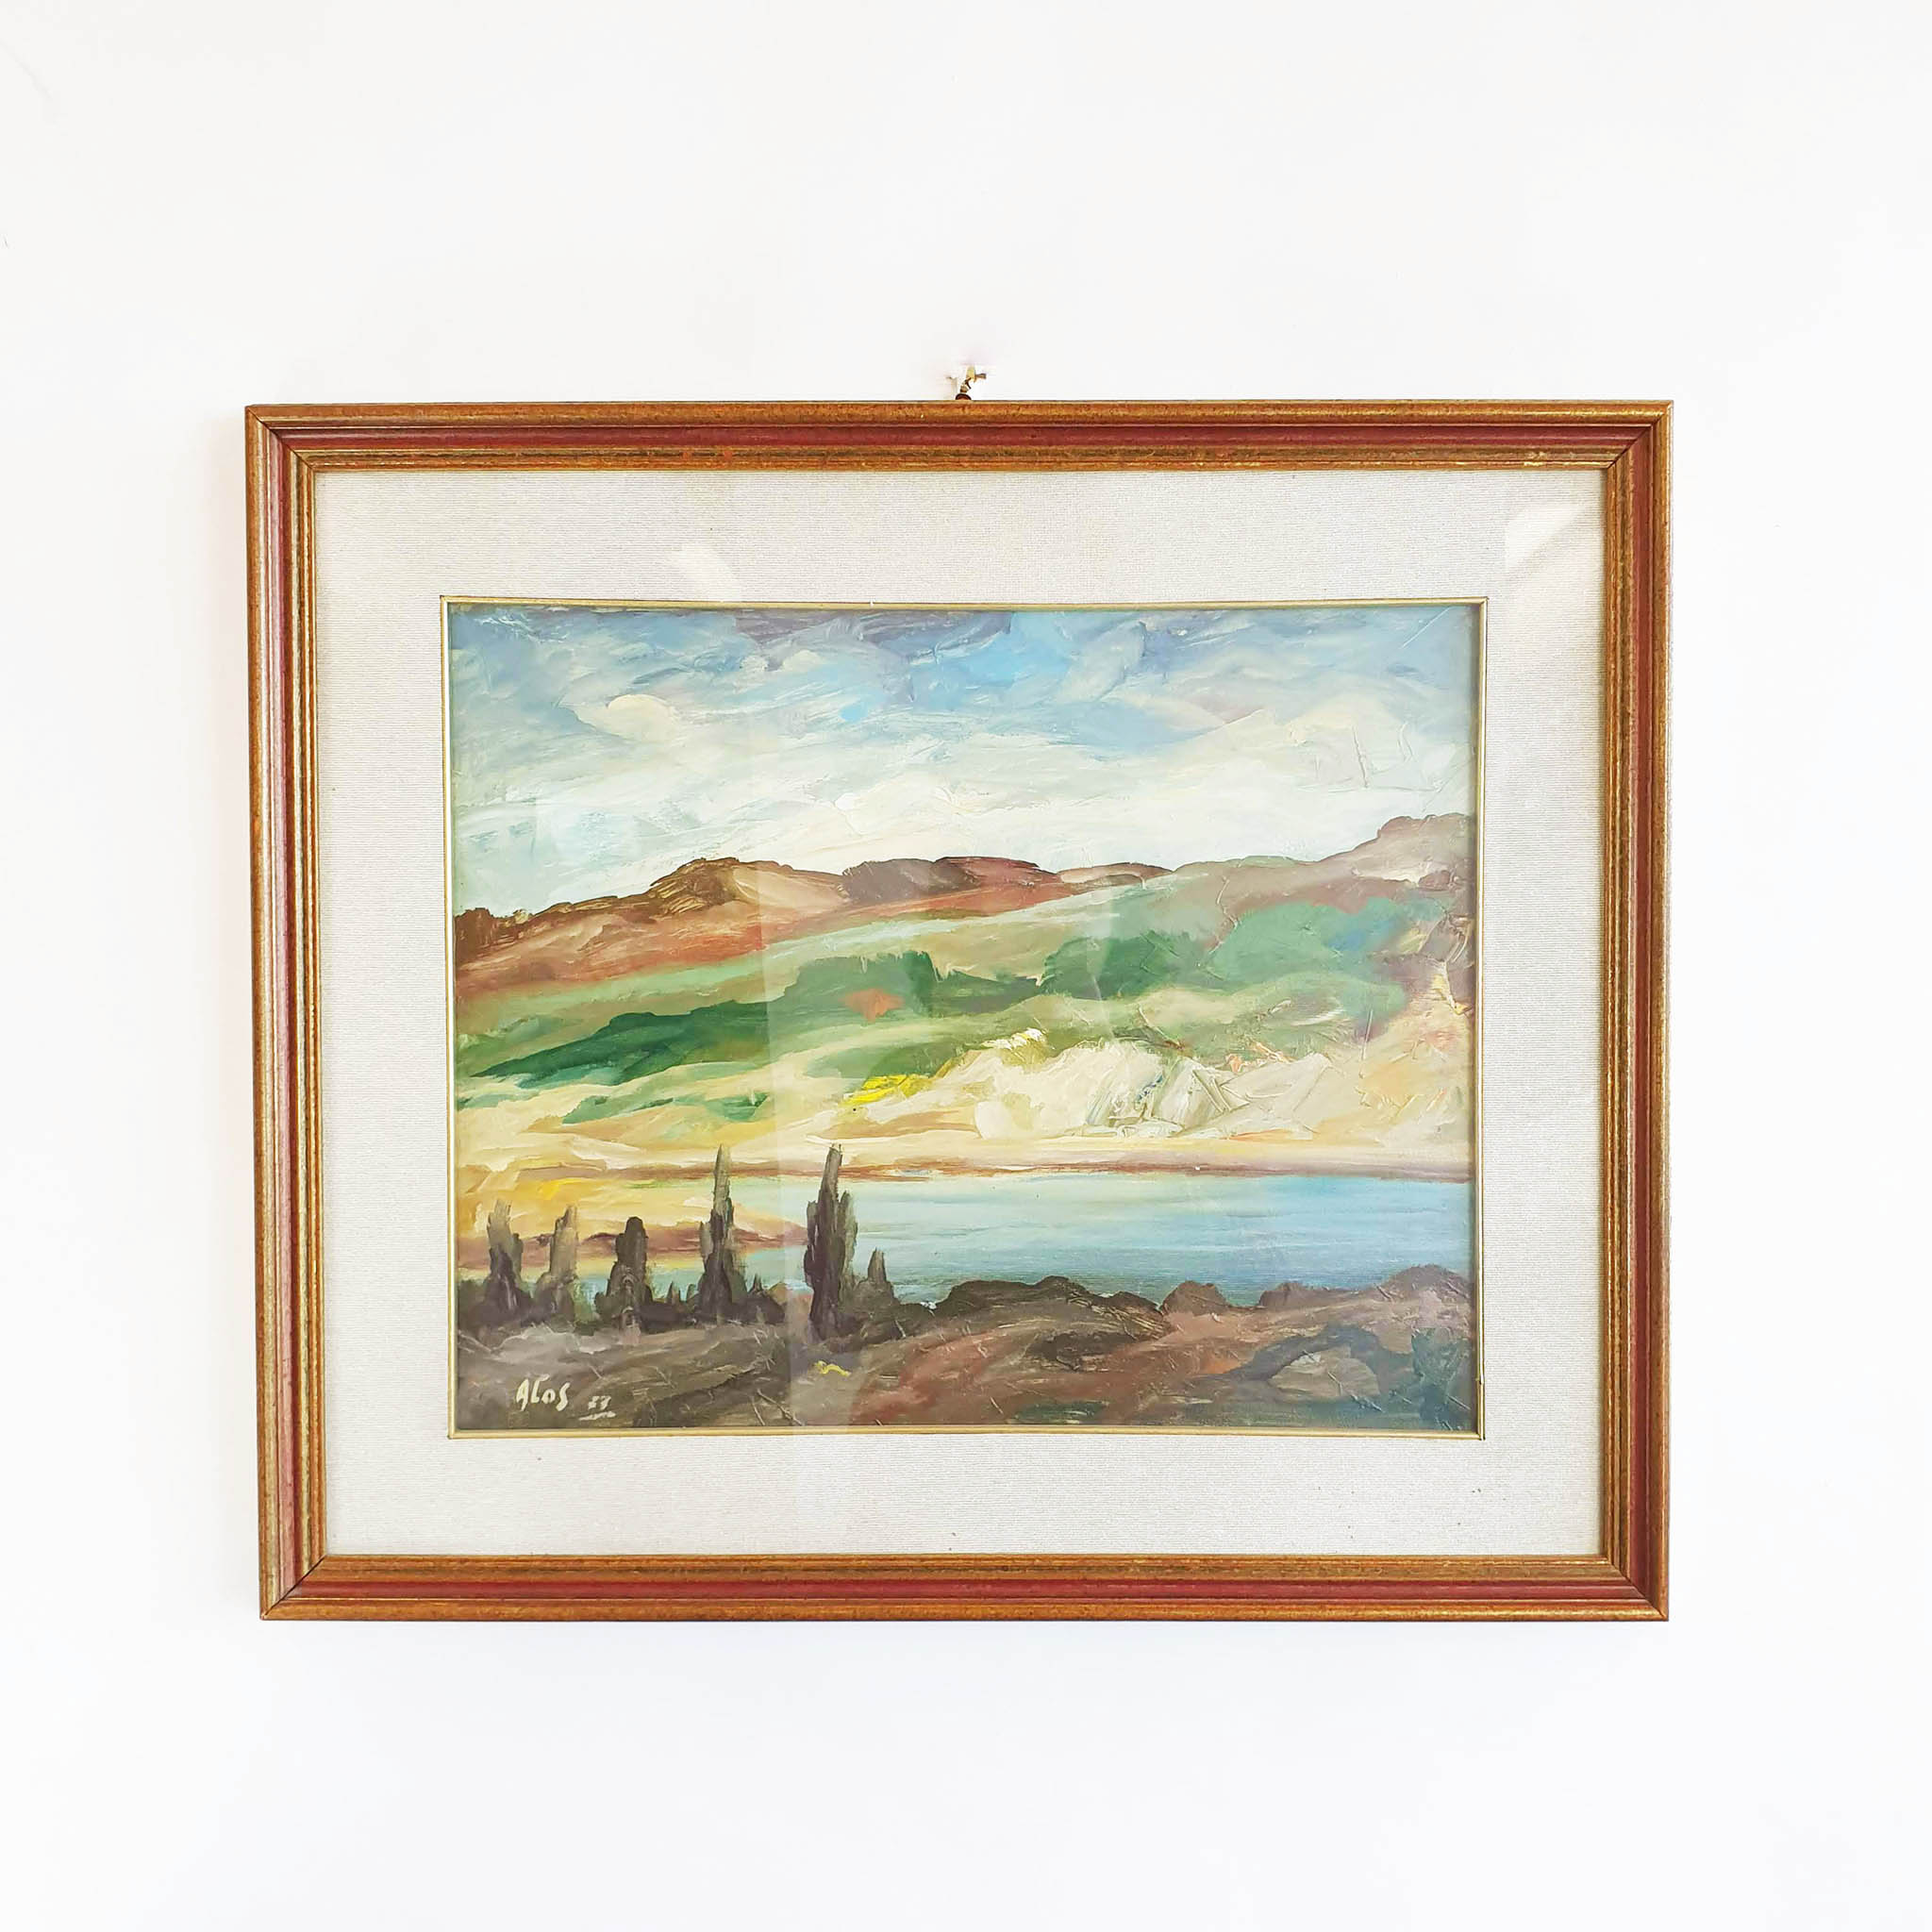 1977 oil painting of Isola d'Elba